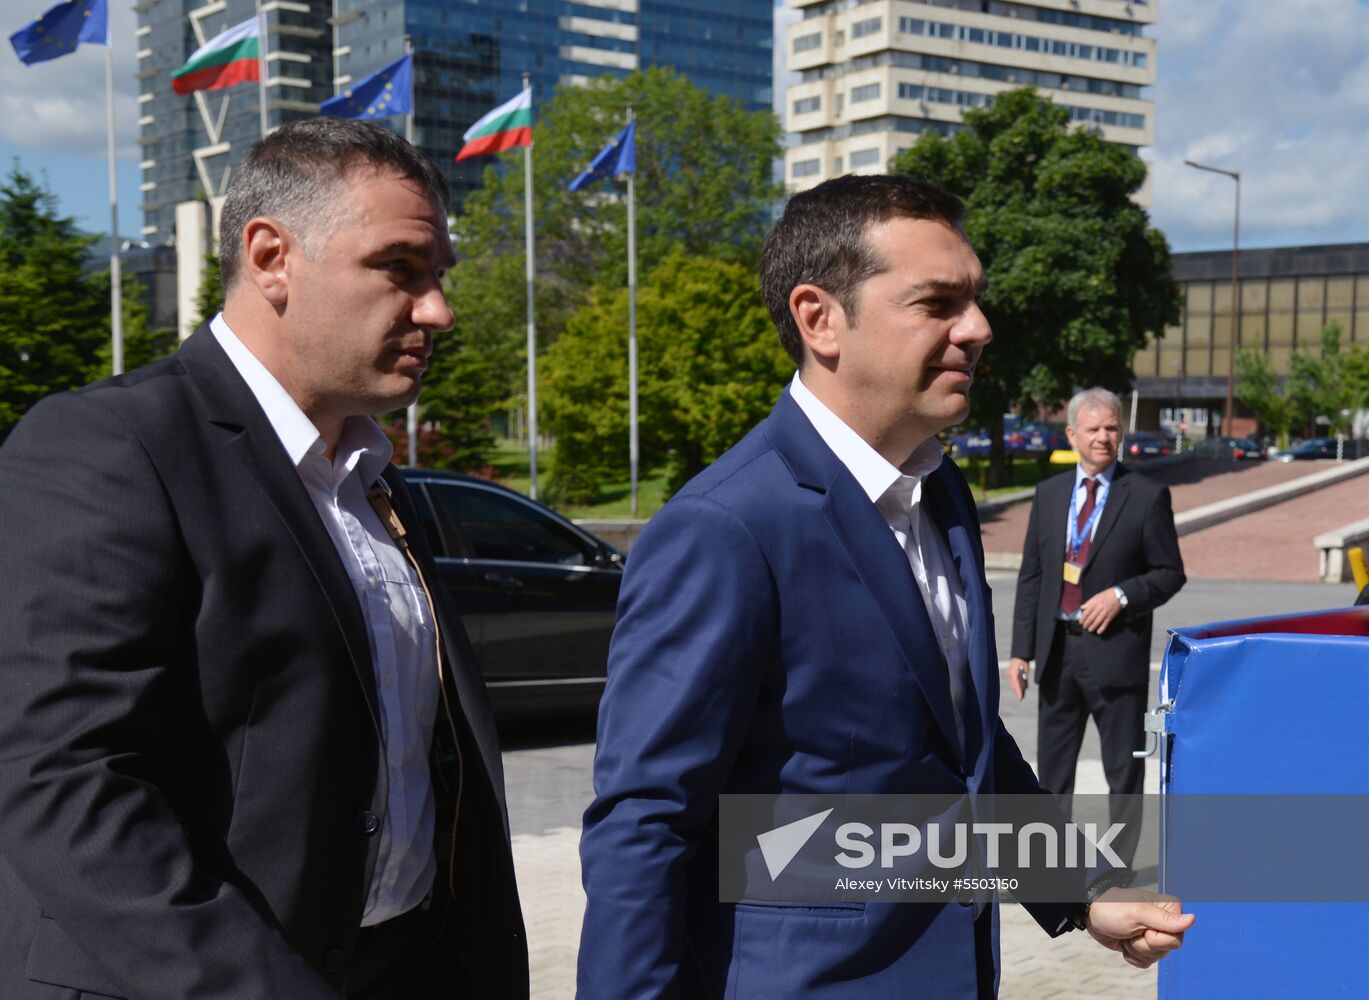 EU-Western Balkans Summit in Sofia